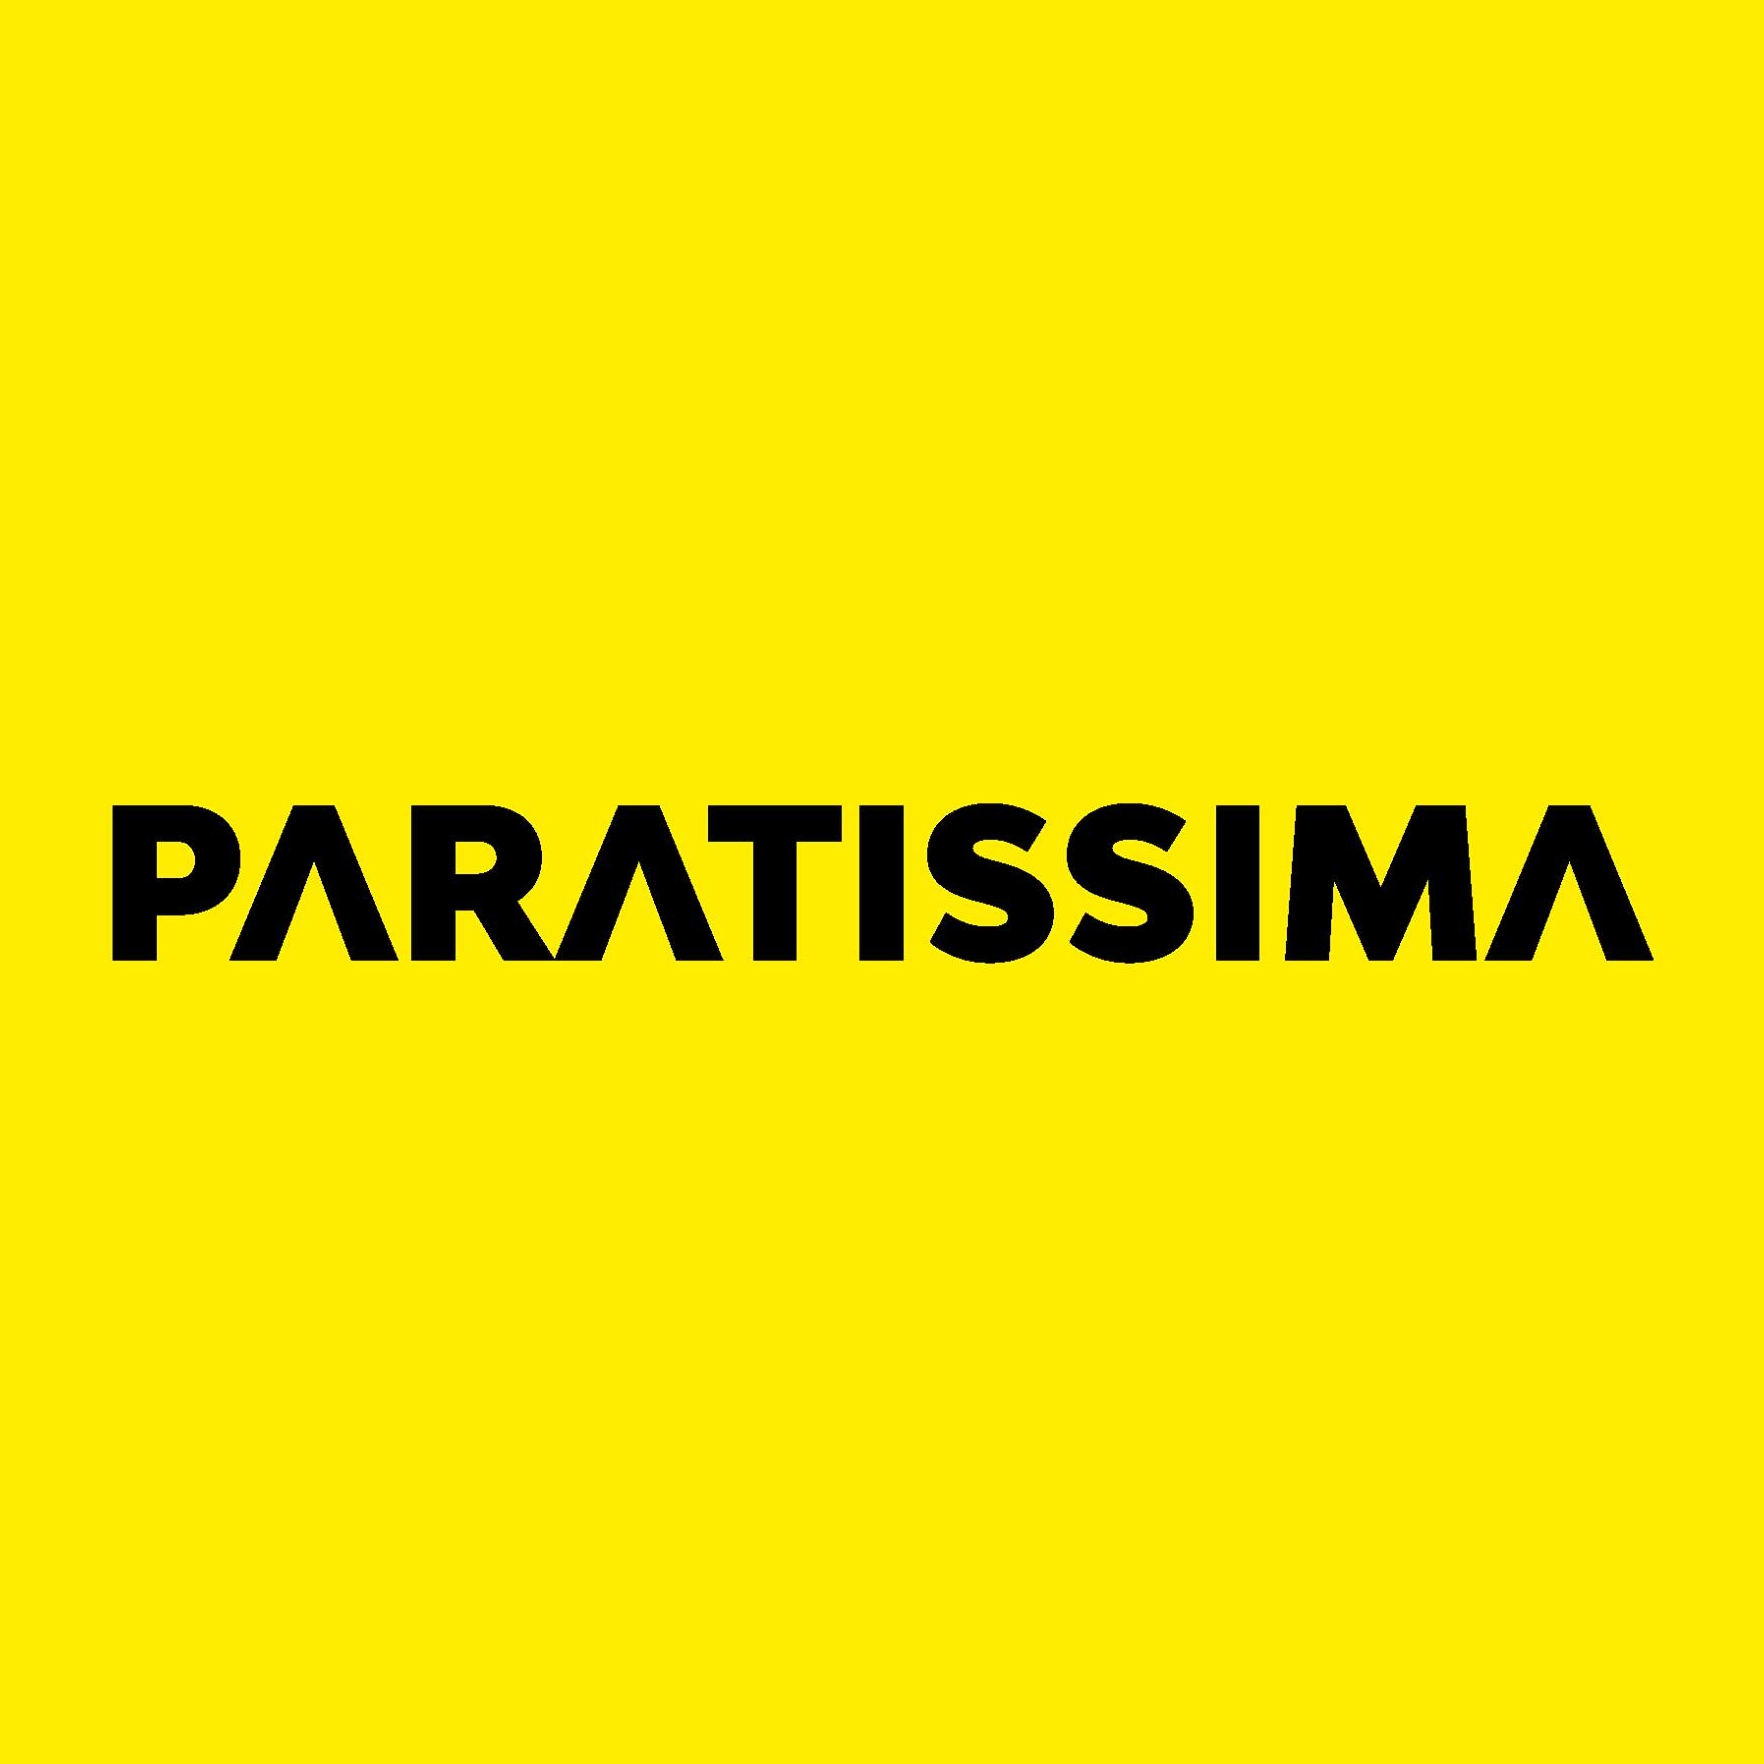 Paratissima - Torino